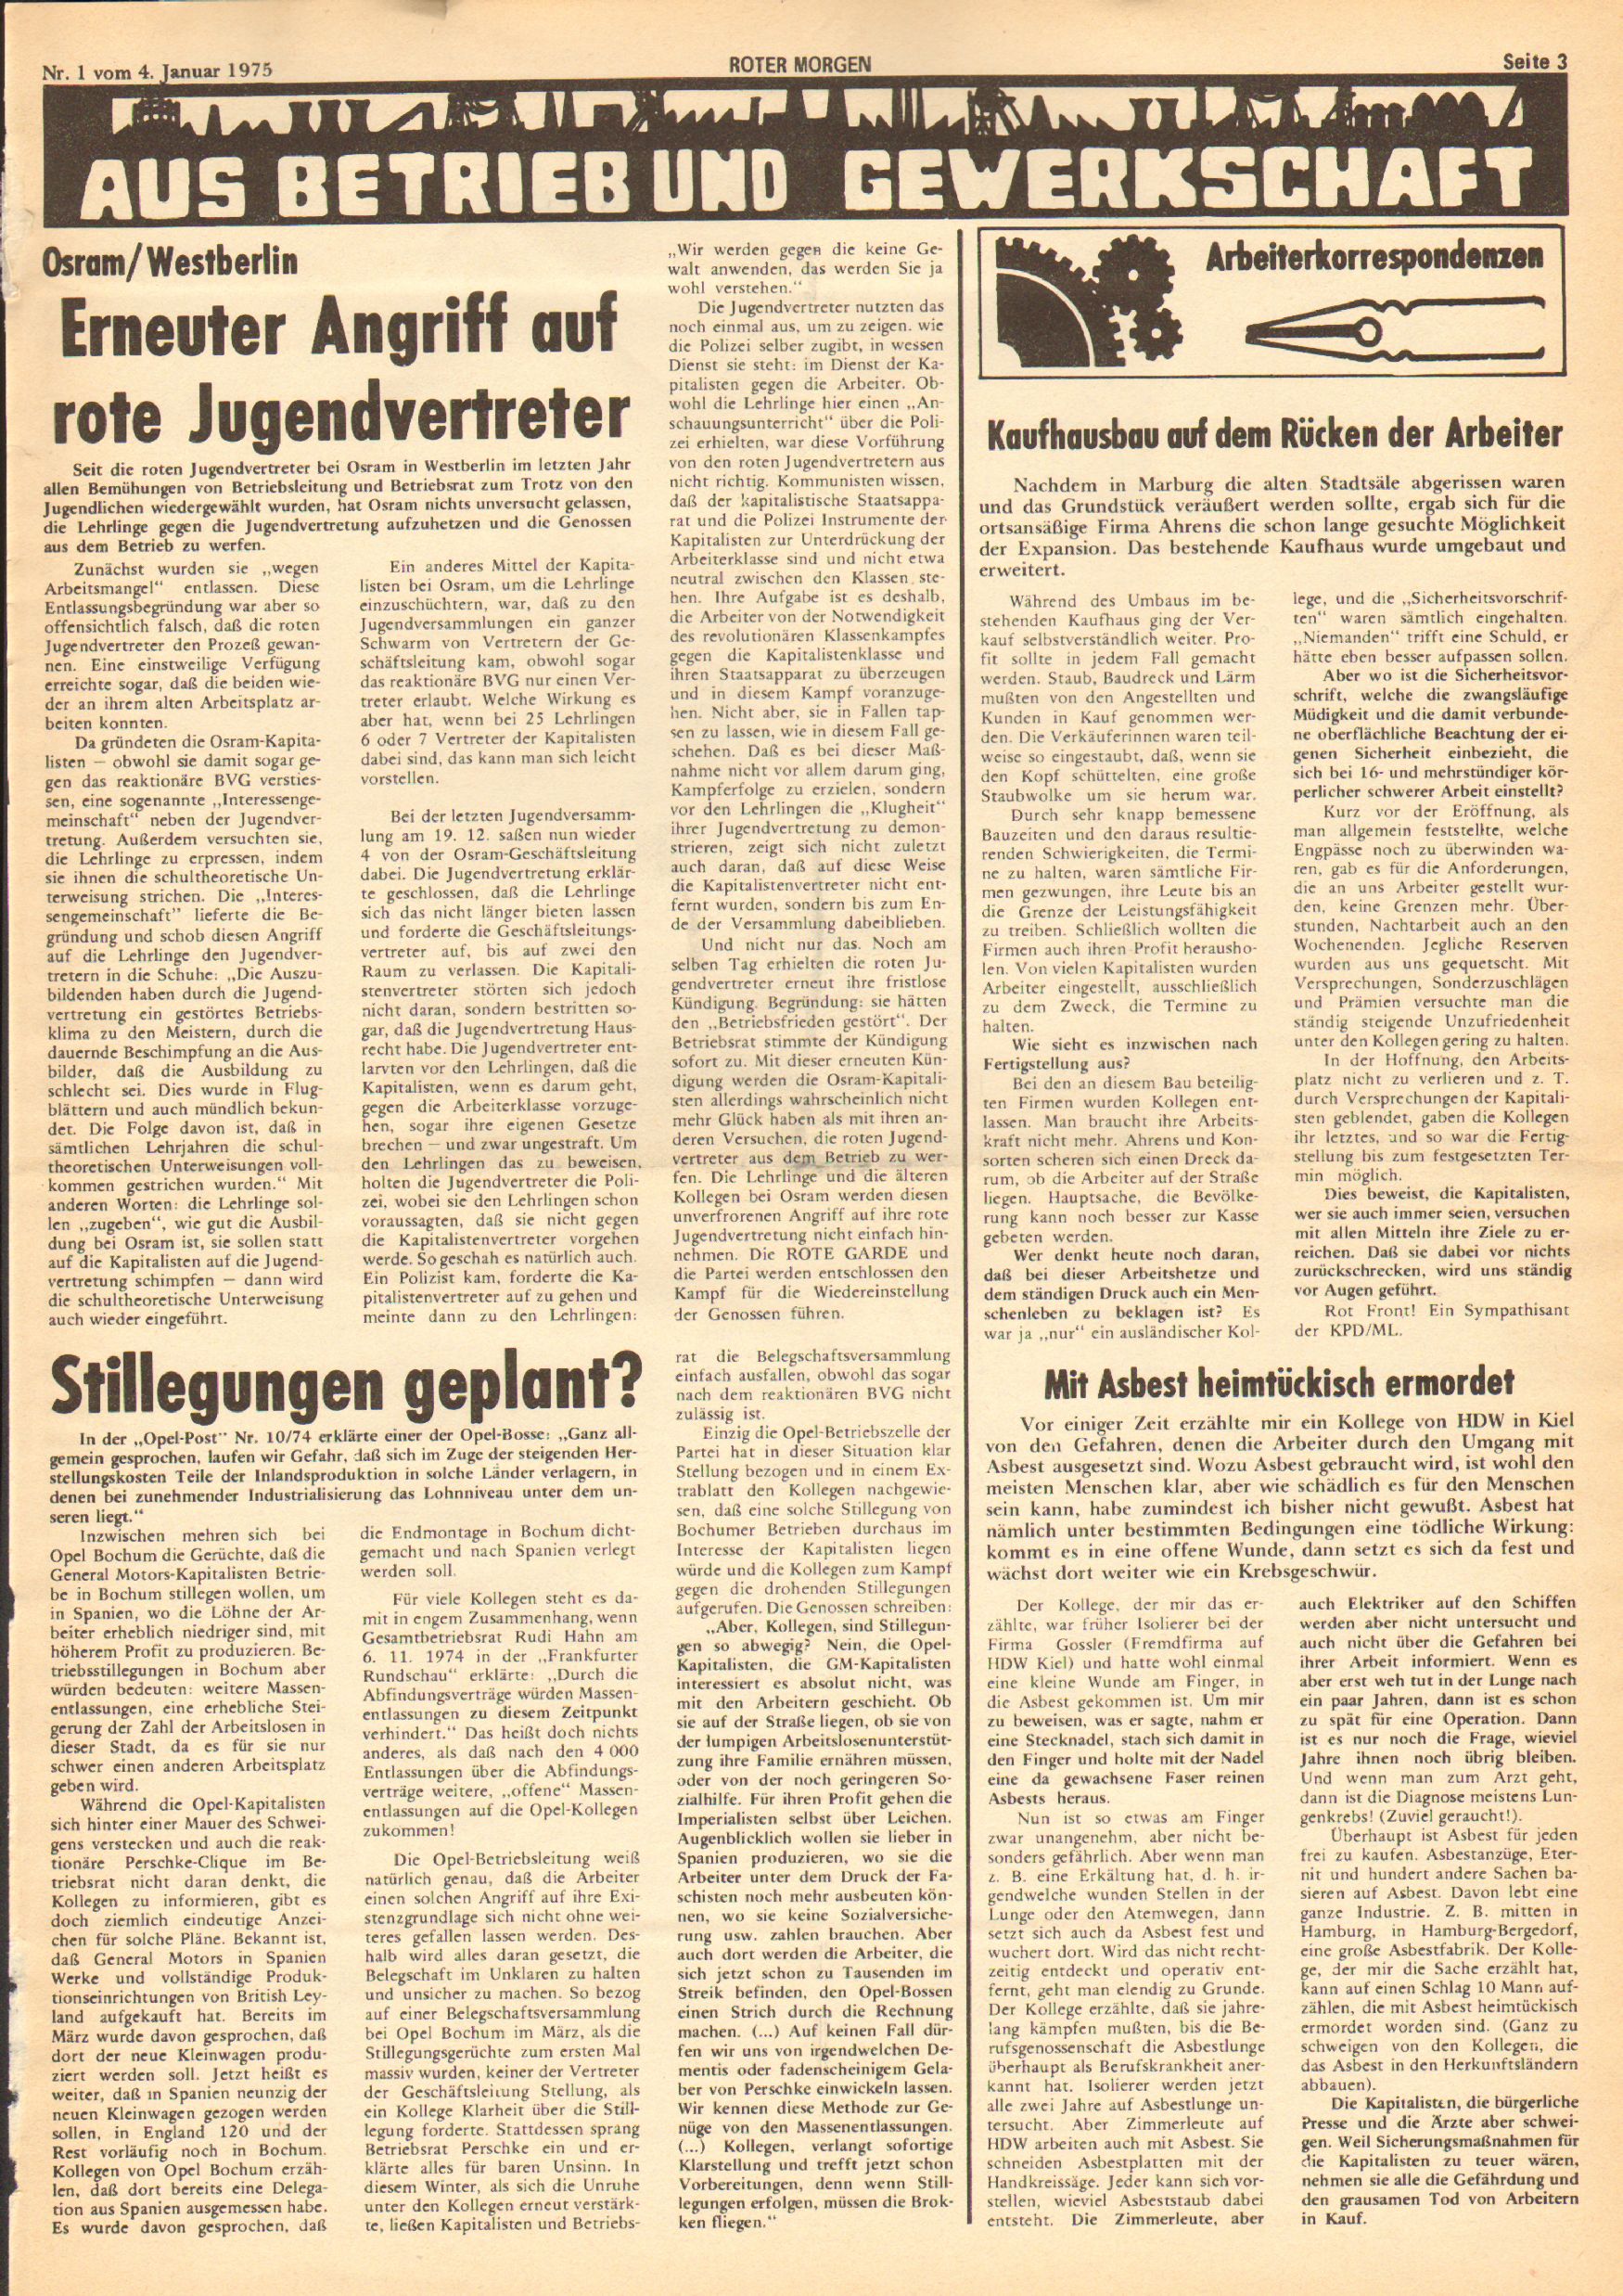 Roter Morgen, 9. Jg., 4. Januar 1975, Nr. 1, Seite 3